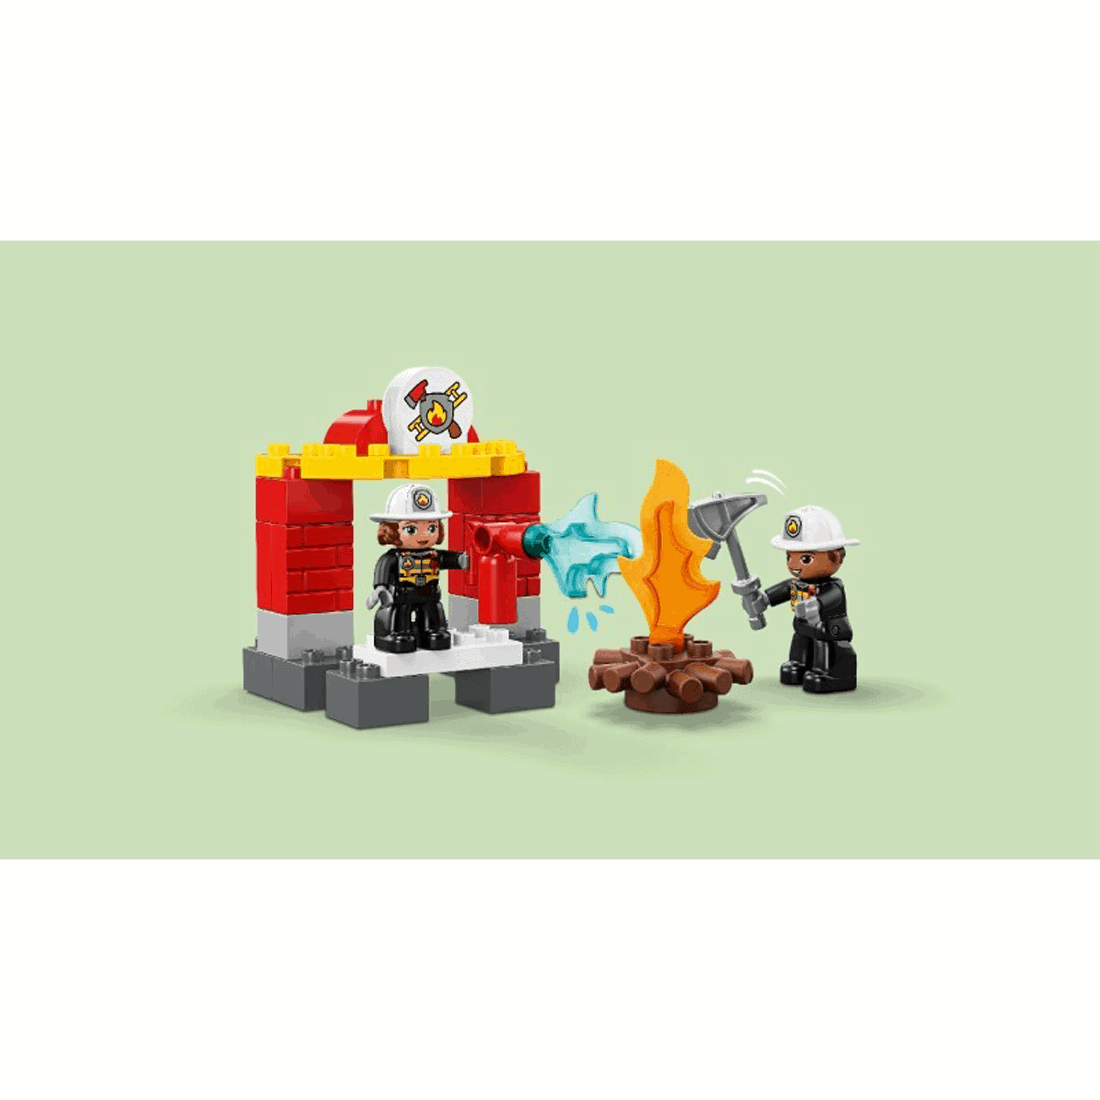 LEGO DUPLO® Σταθμός Πυροσβεστικής